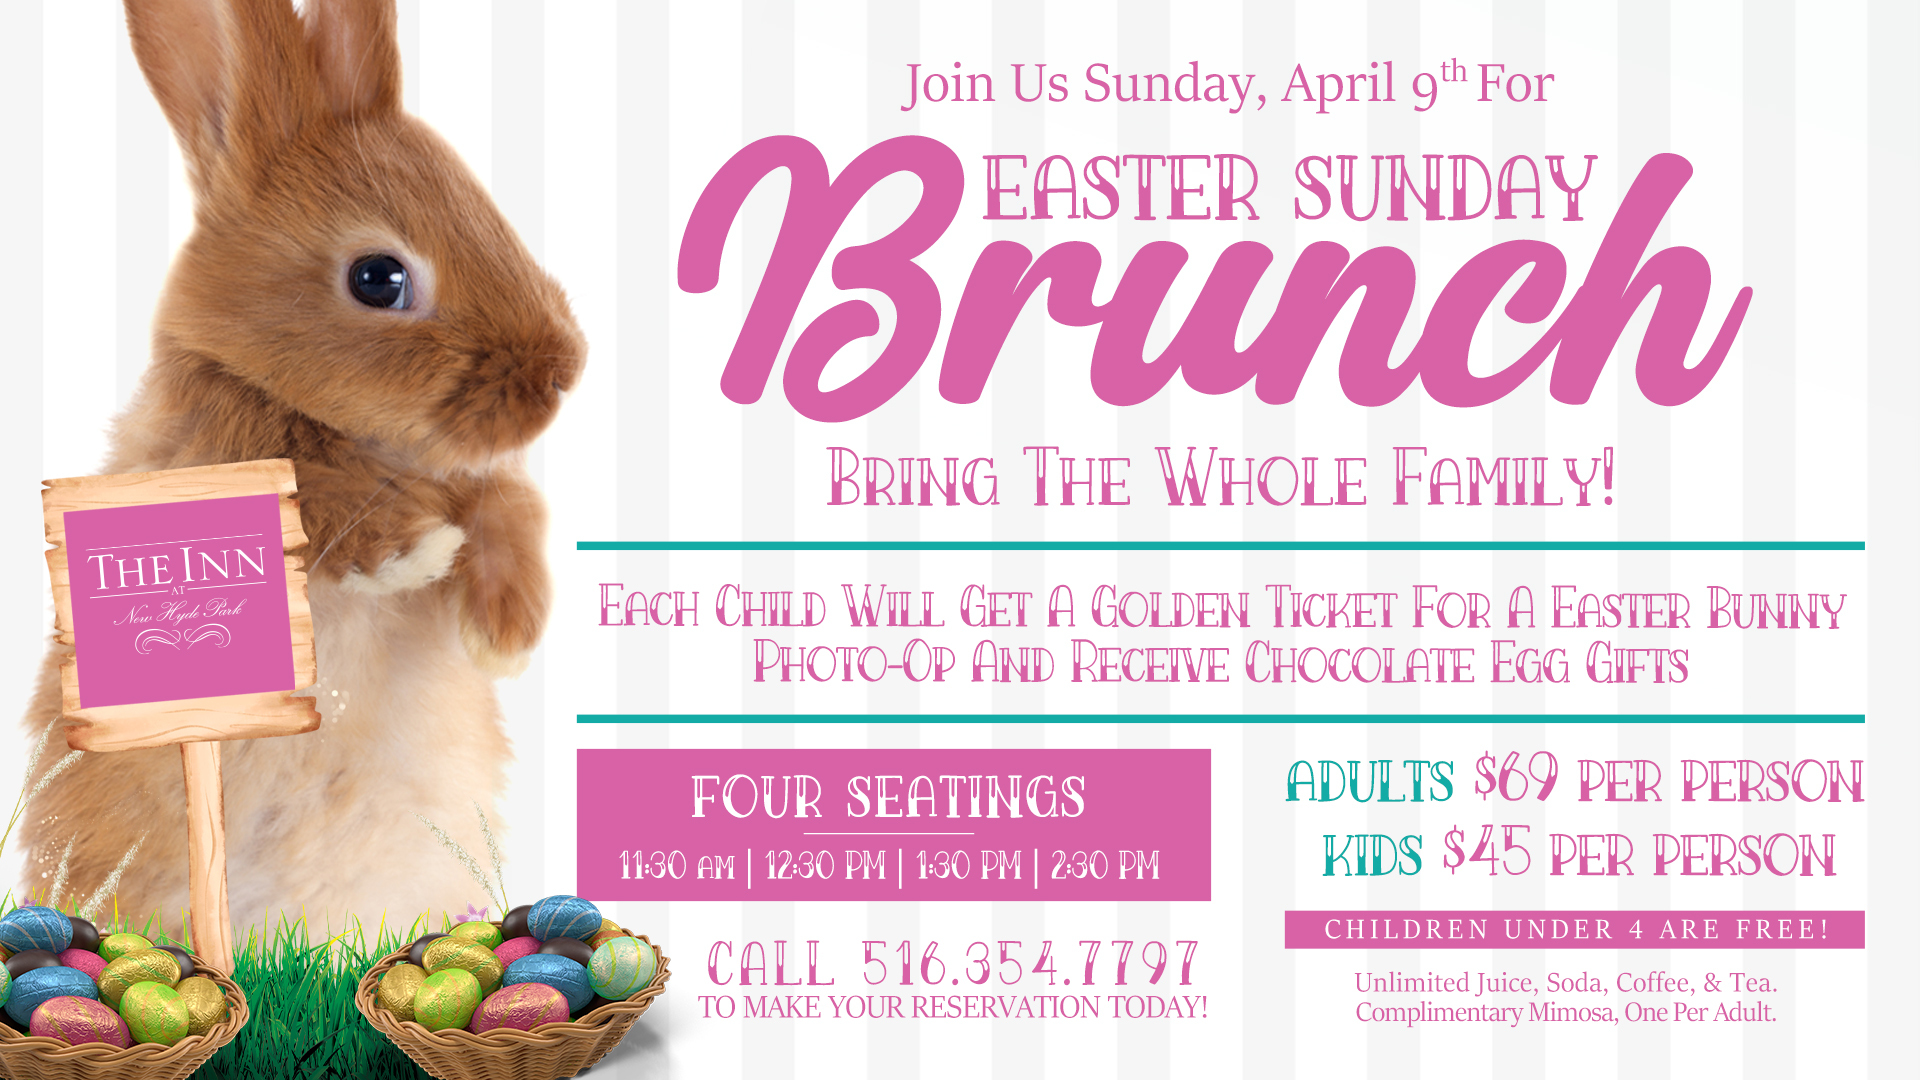 Easter Sunday Brunch